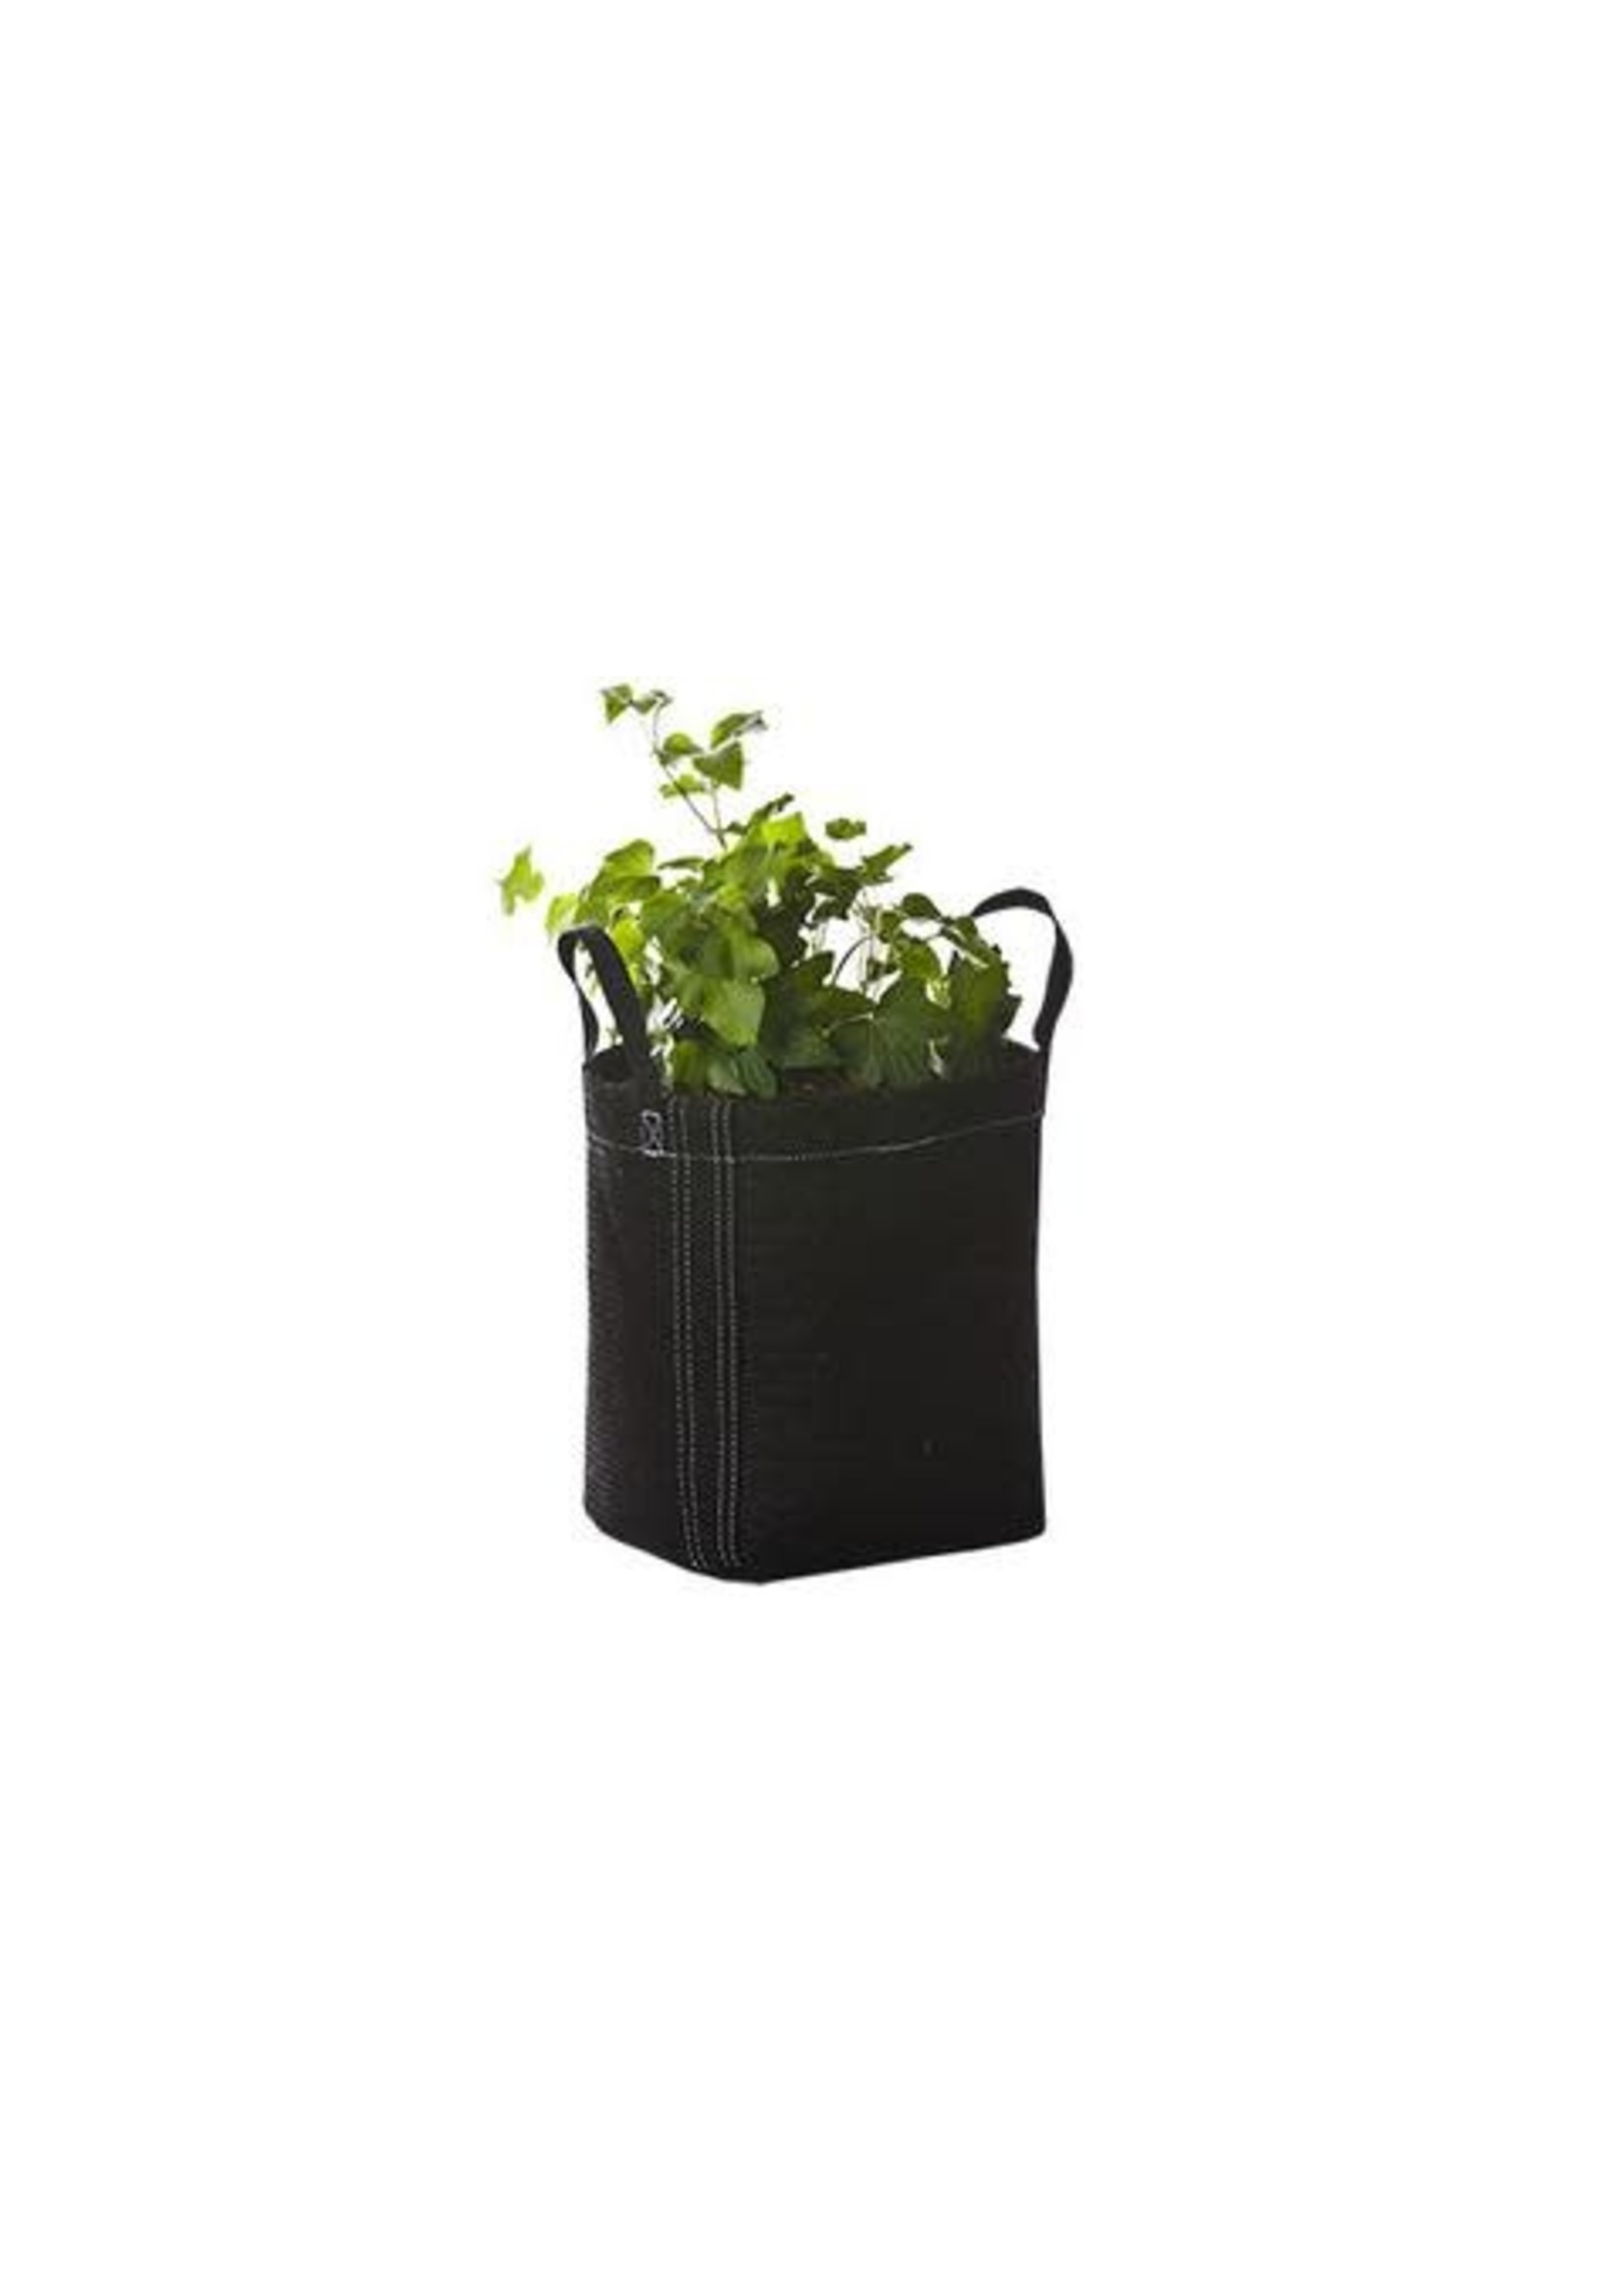 GeoPot GeoPot Fabric Gardening Pot with Handles 3 gallon